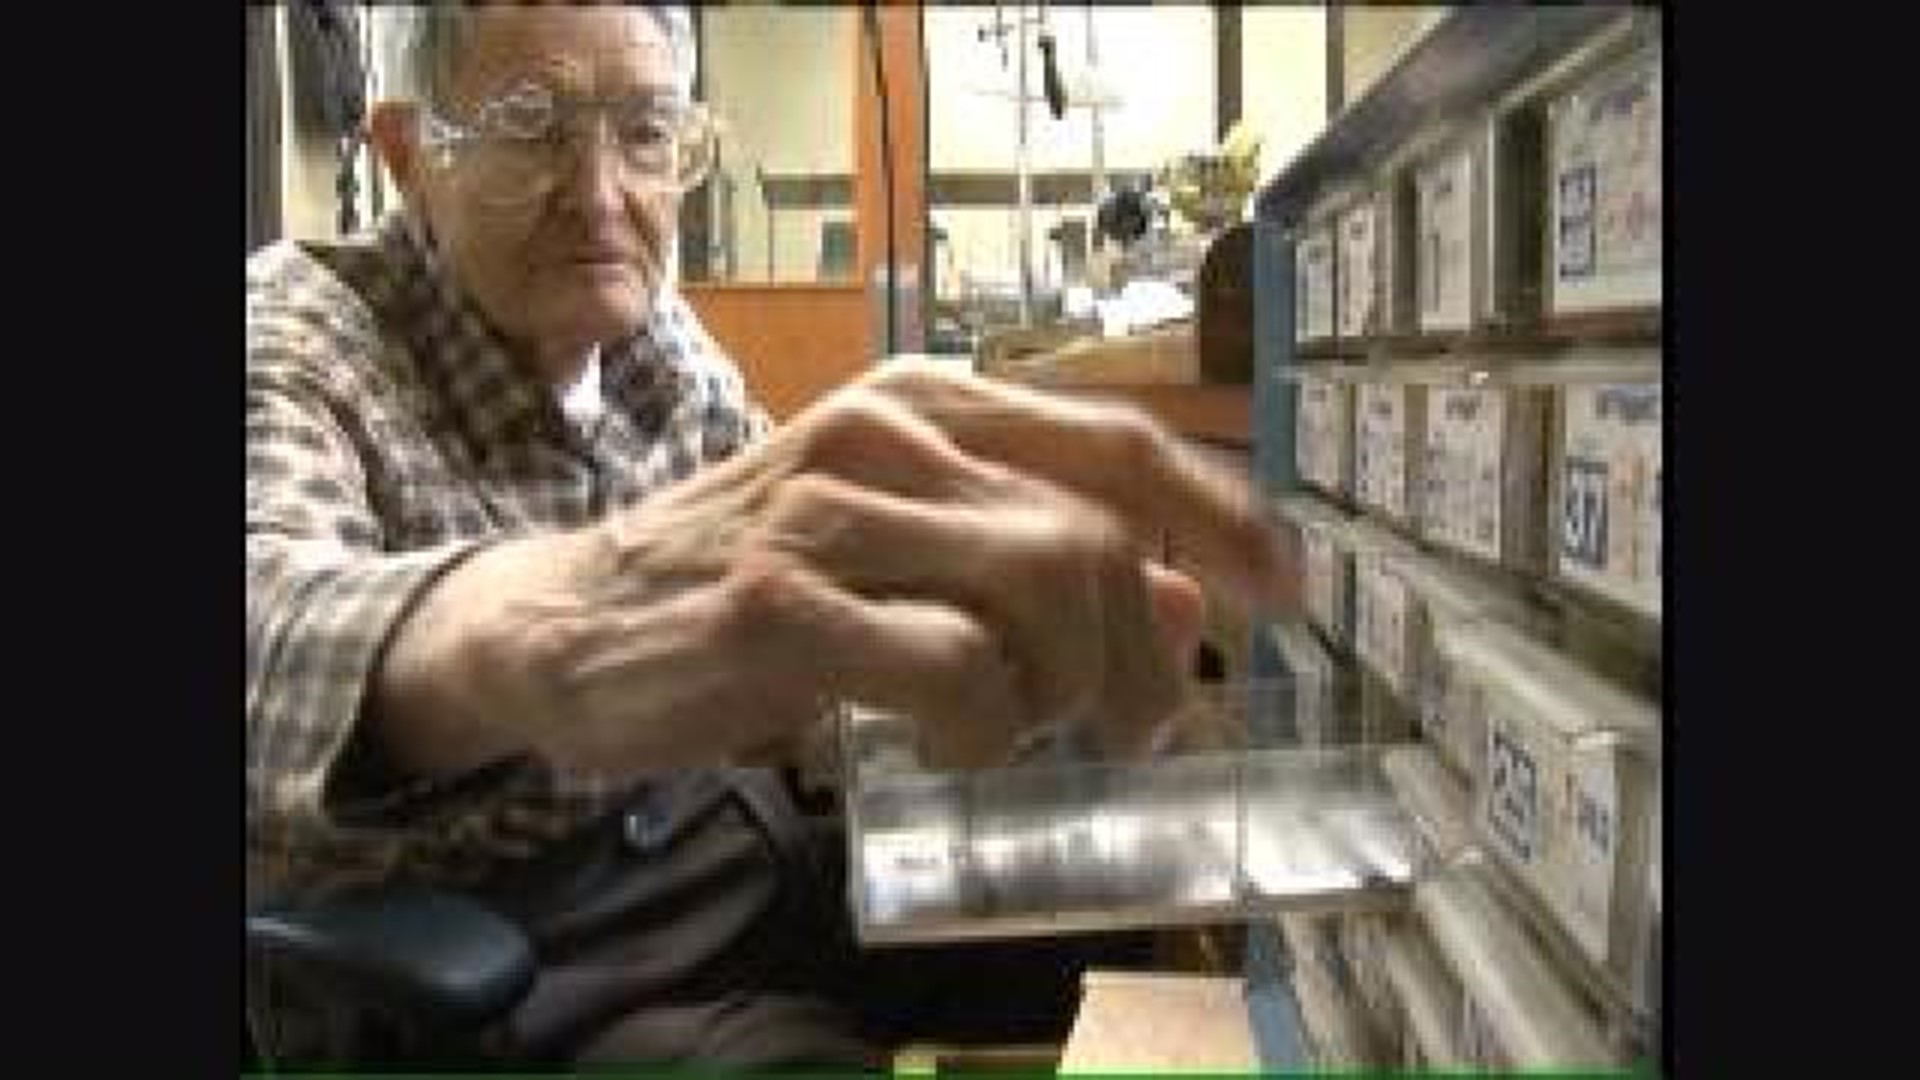 Bentonville Jeweler still working at 95 years old!